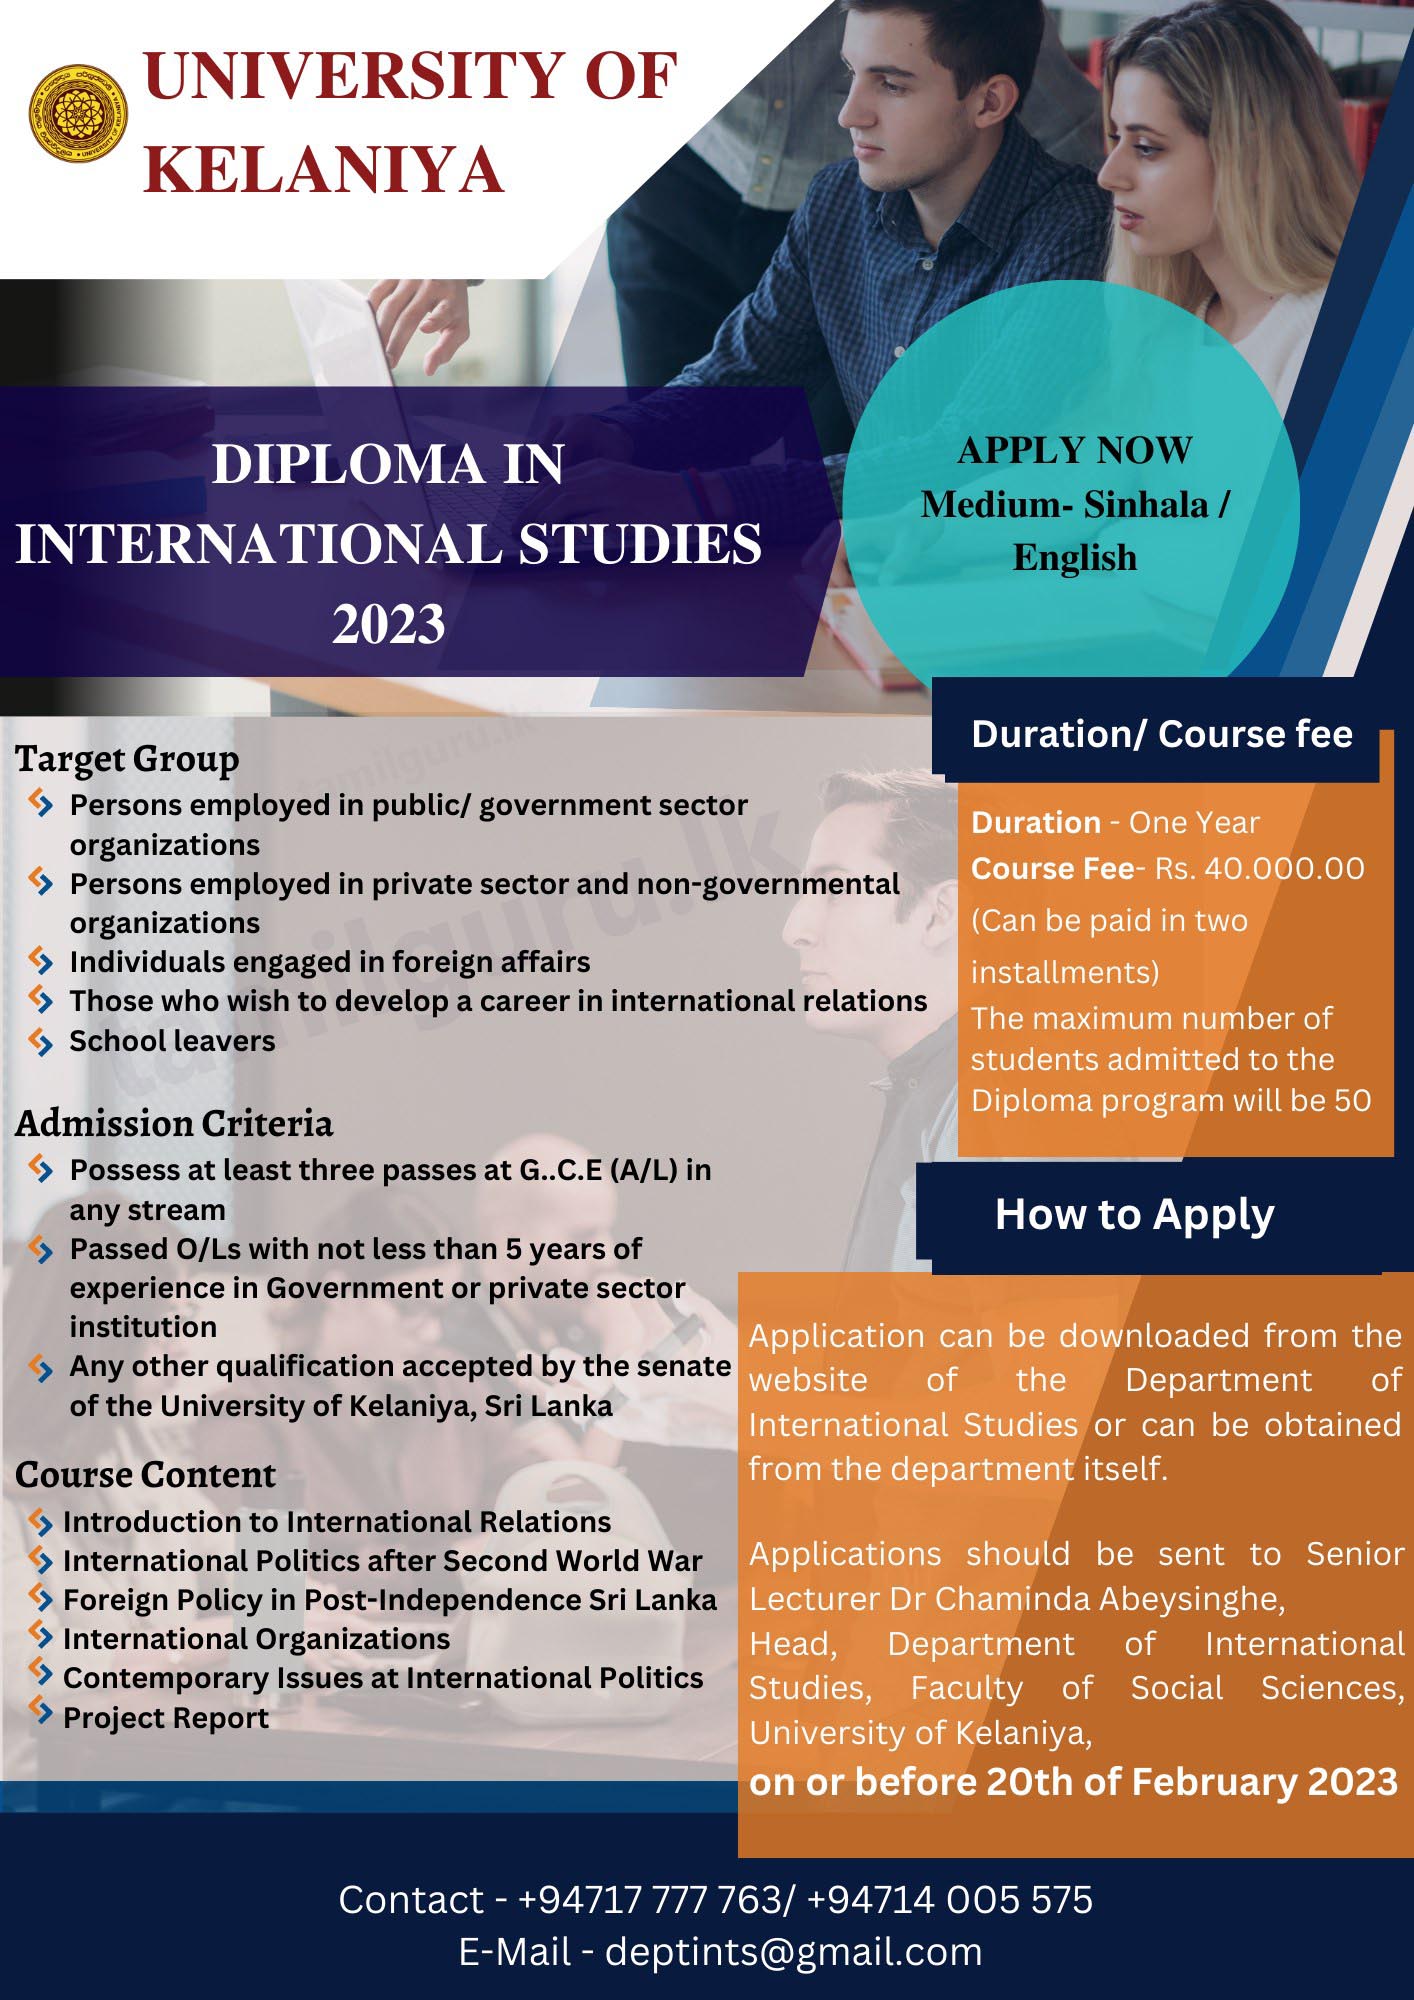 Diploma in International Studies 2023 - University of Kelaniya